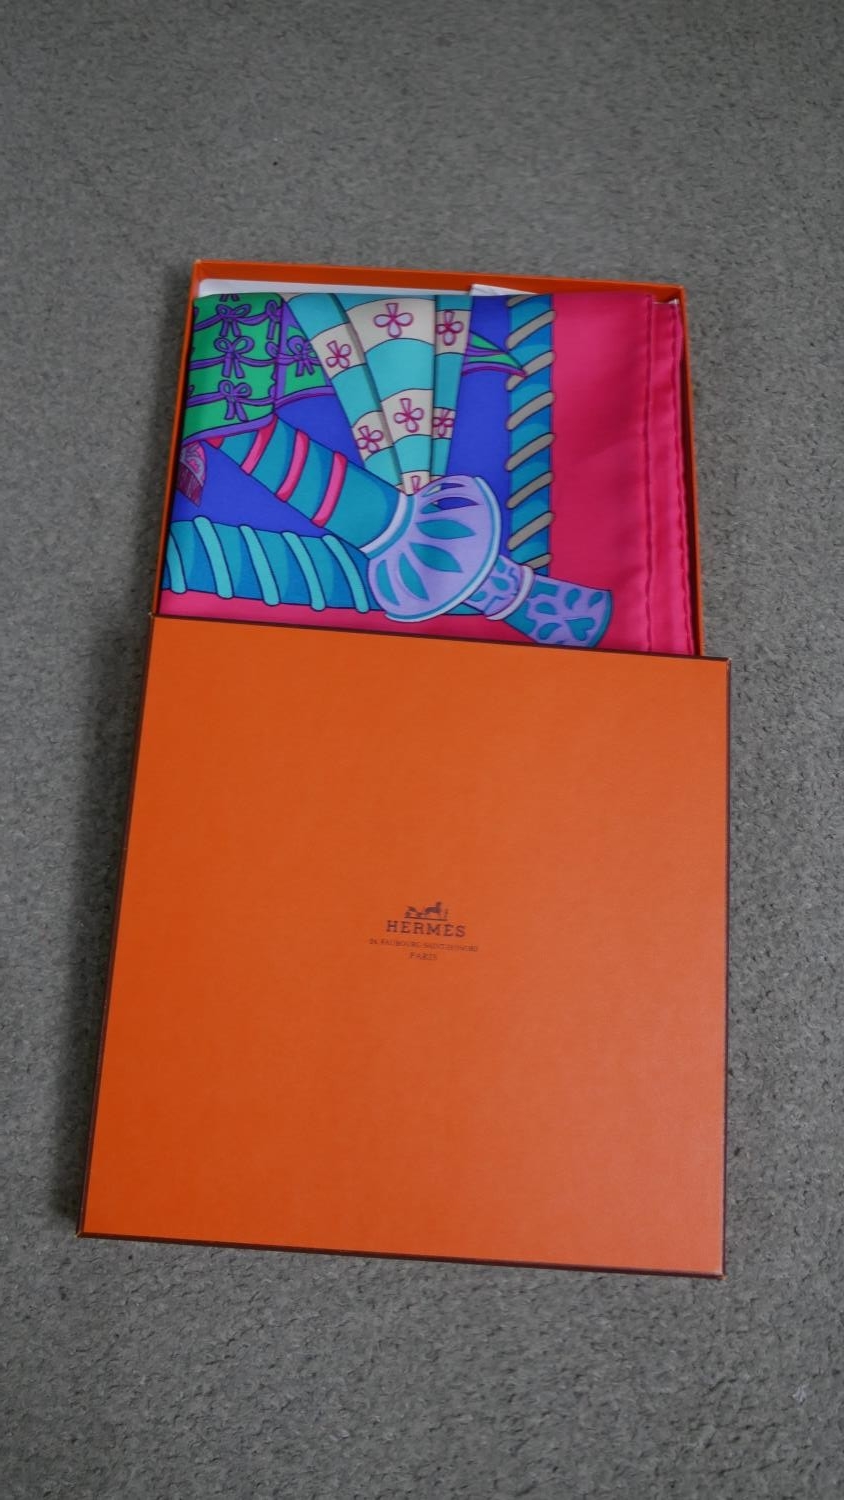 A Boxed Hermès silk scarf, pink, purple and teal 'Etendards et Bannieres', designed by Annie Faivre.